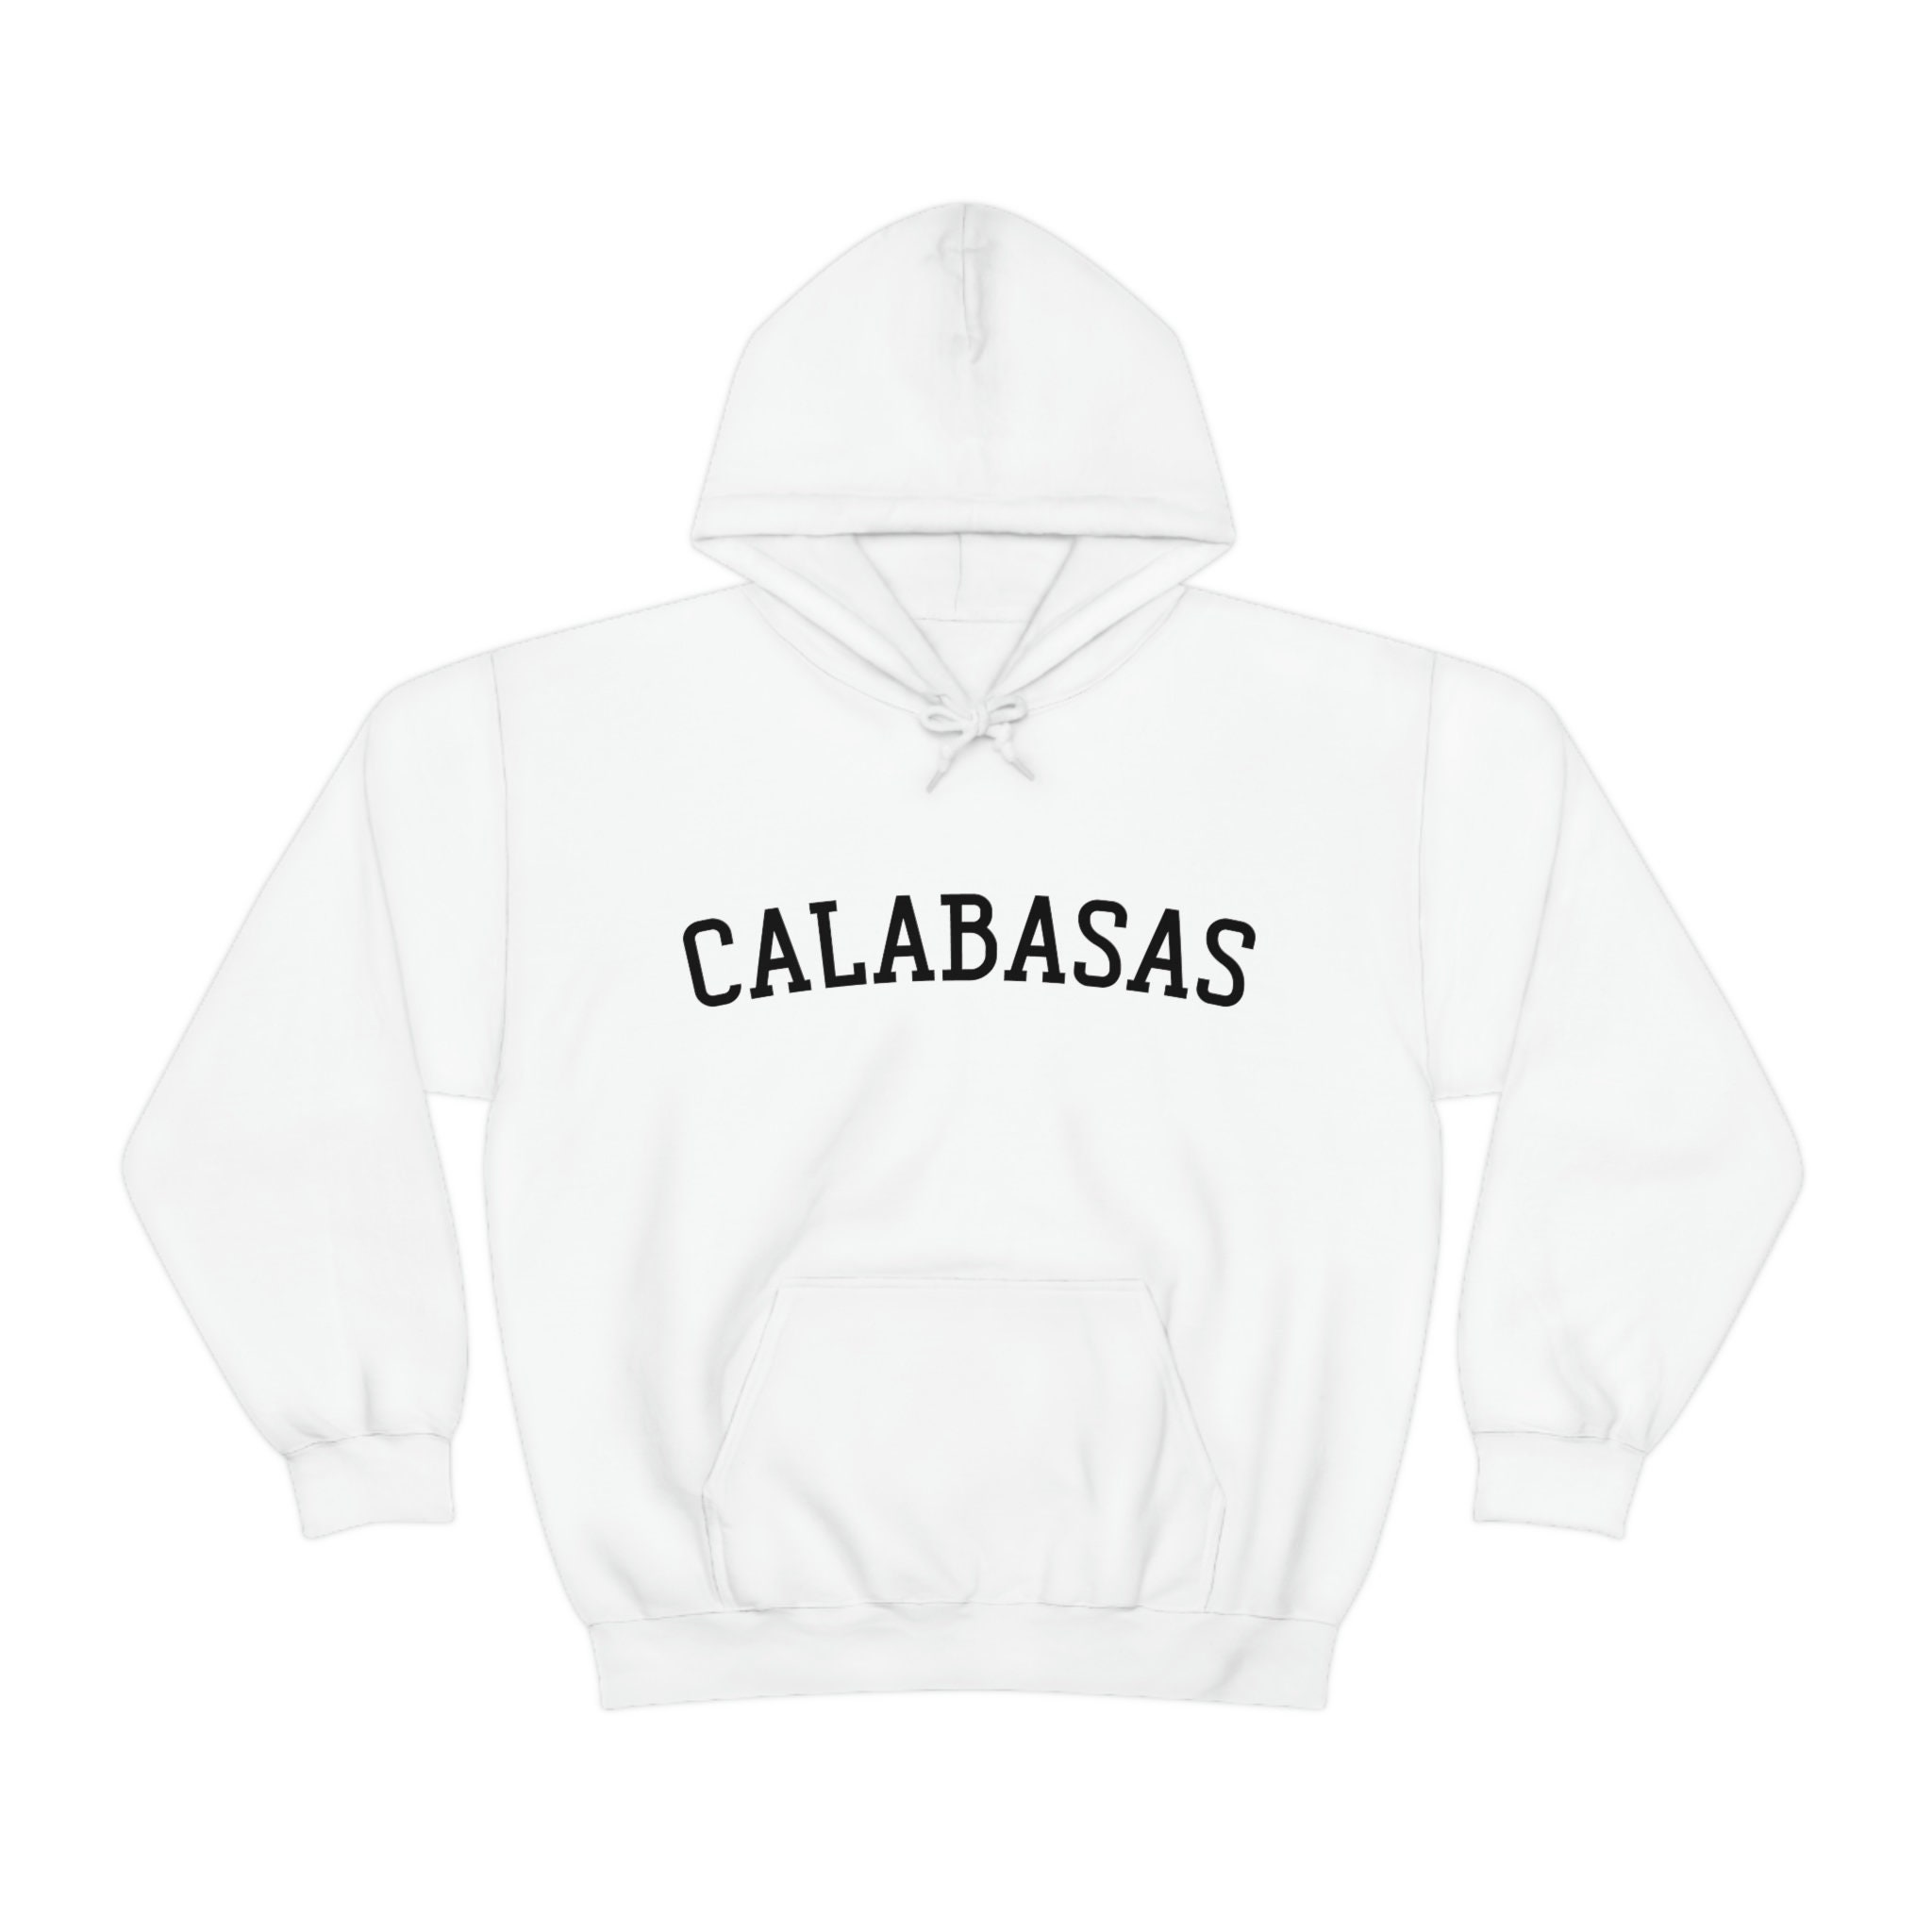 Calabasas hoodie - Etsy